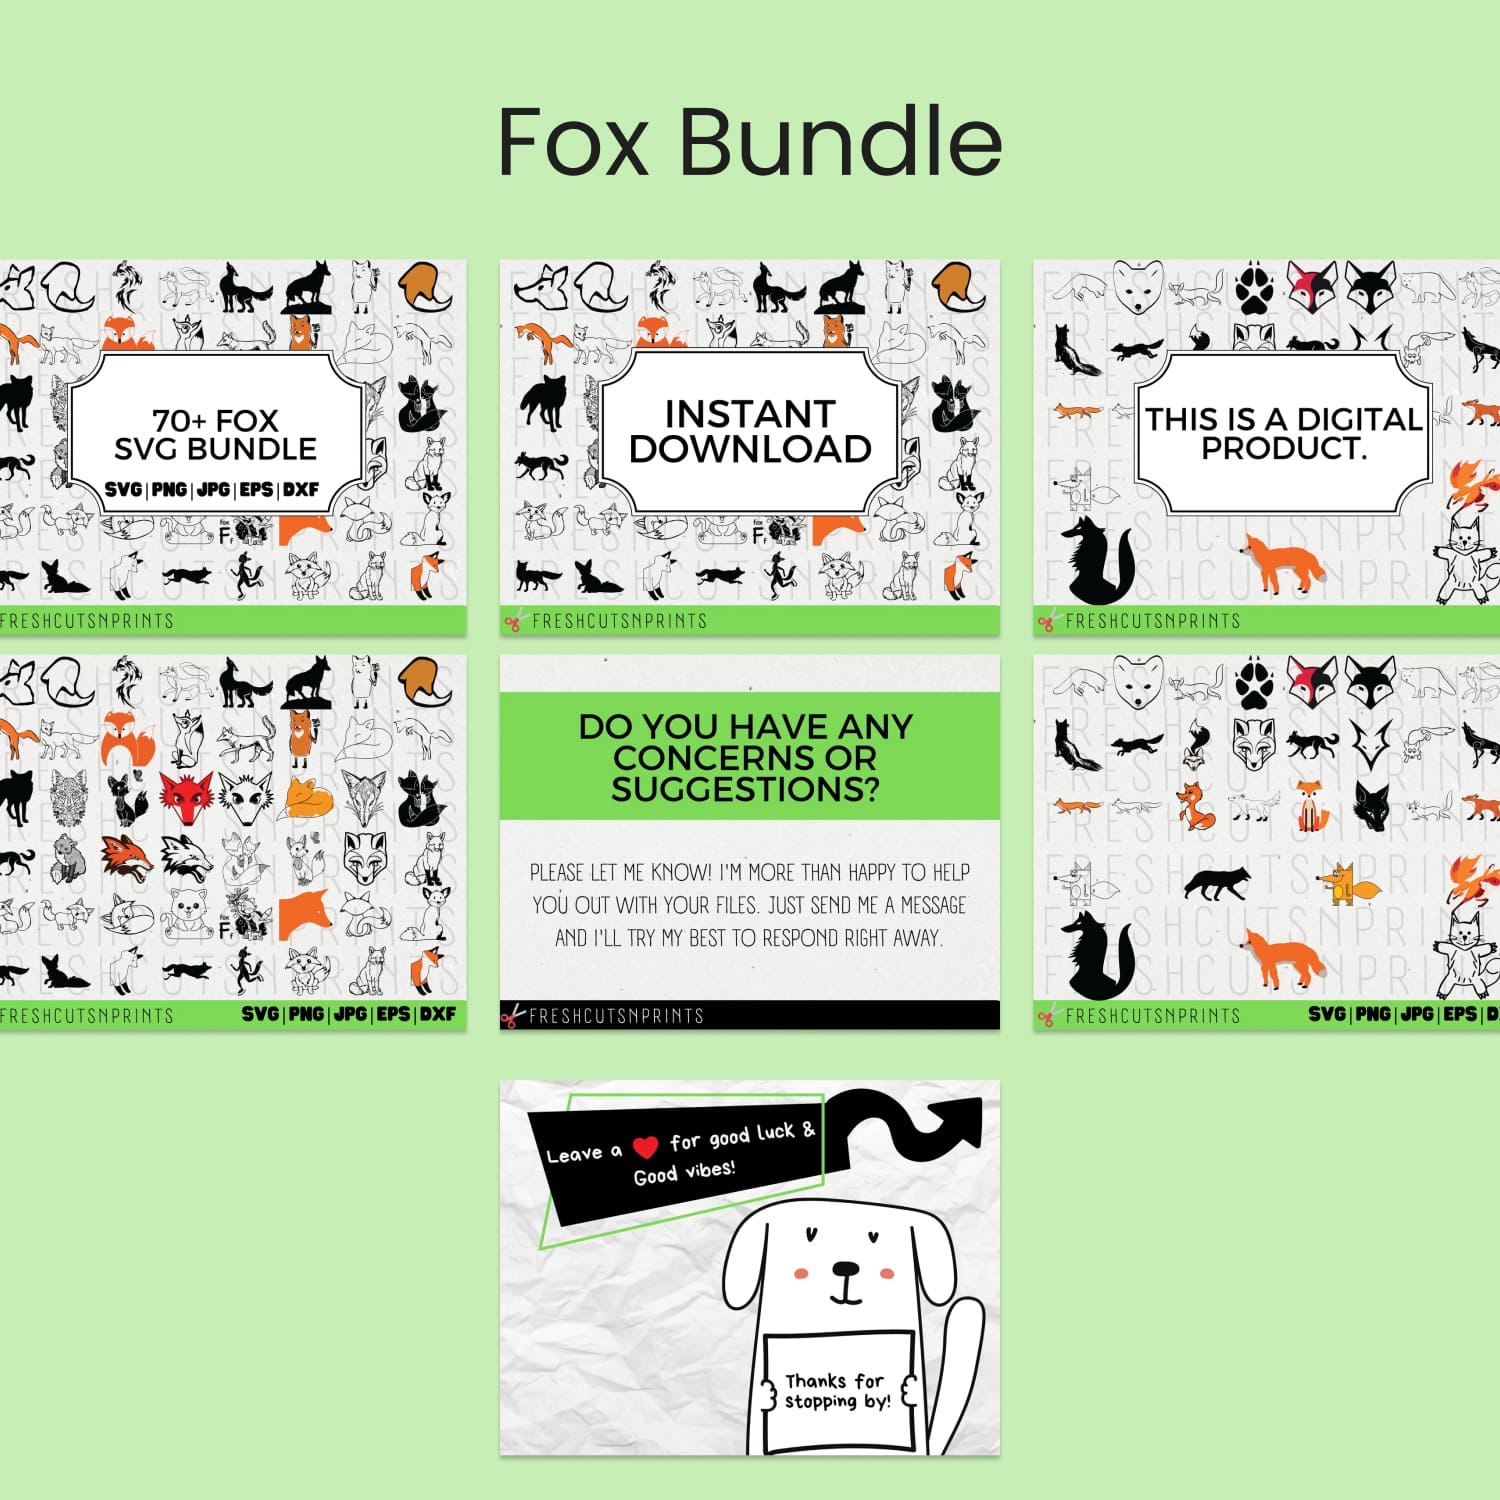 Fox bundle - main image preview.